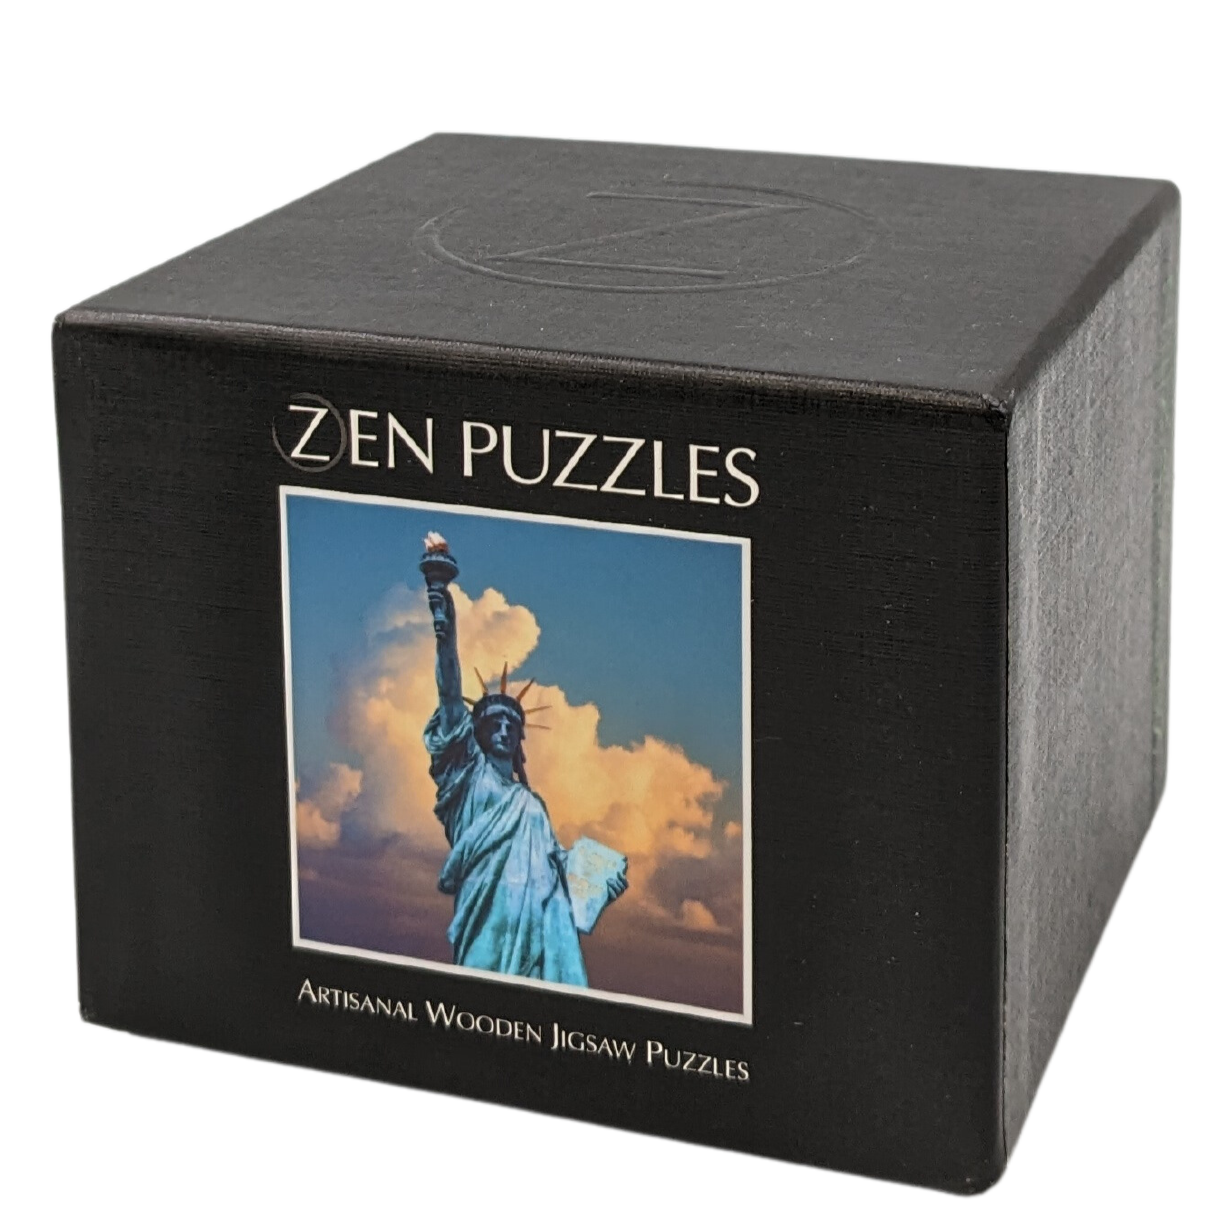 Zen Puzzles- Lady Liberty Puzzle Product Box